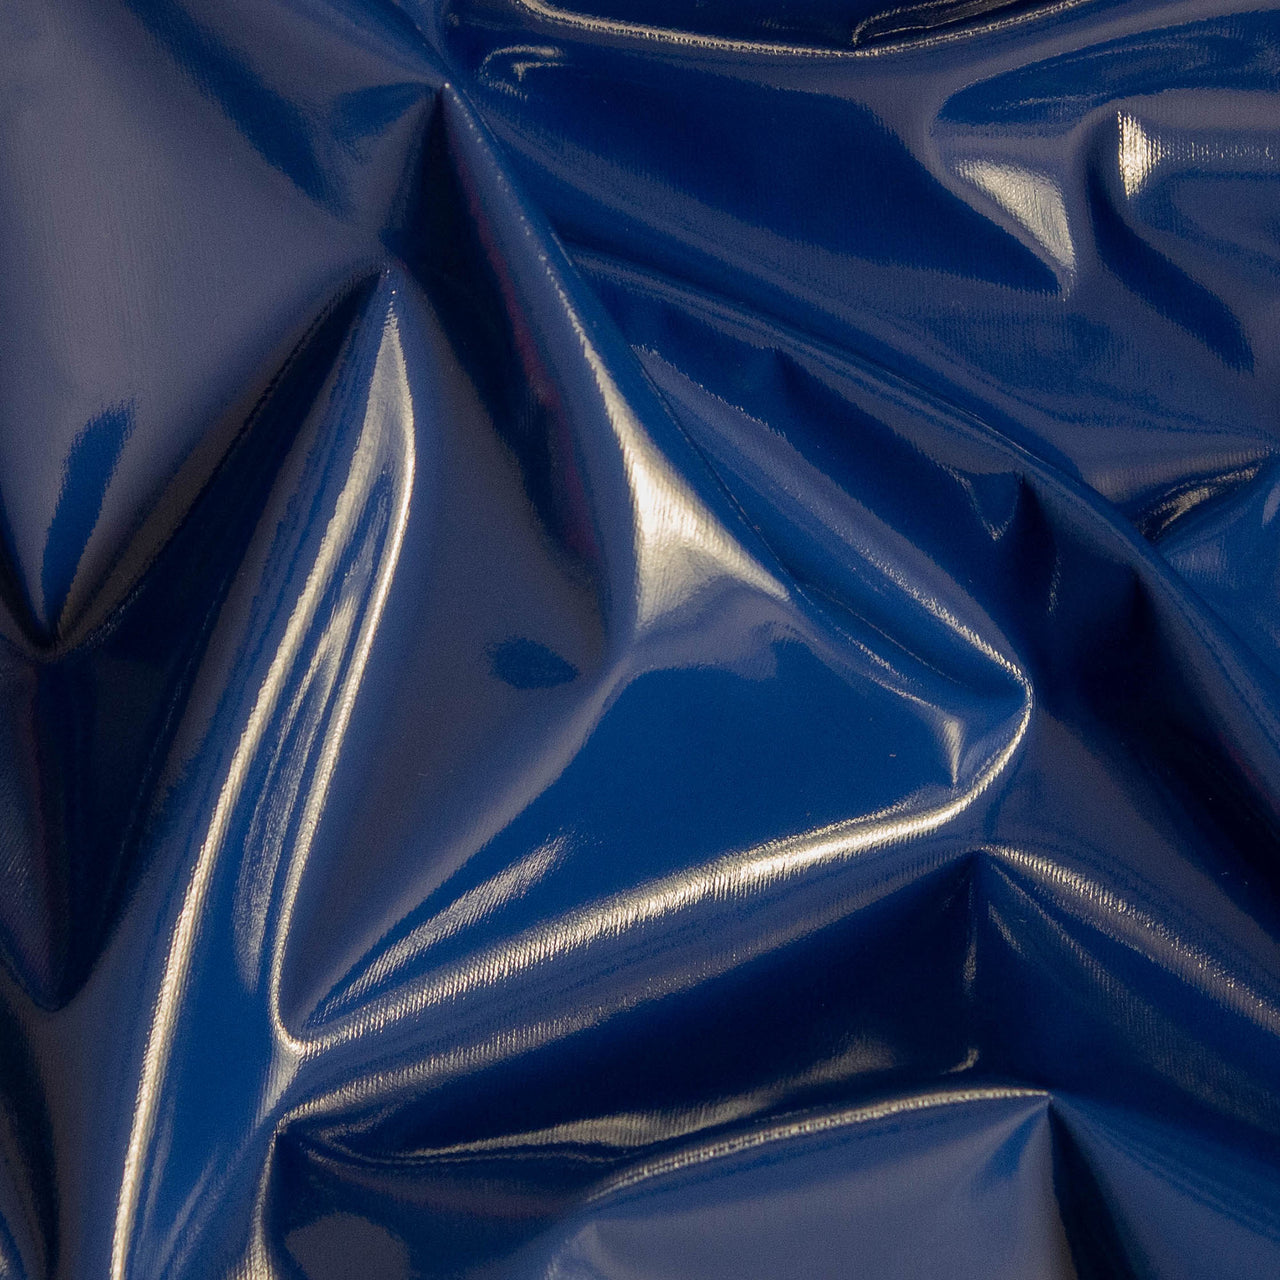 Tissu Stretch Brillant PVC Bleu Royal - Étirement Naturel 1 Sens - Enduit PU